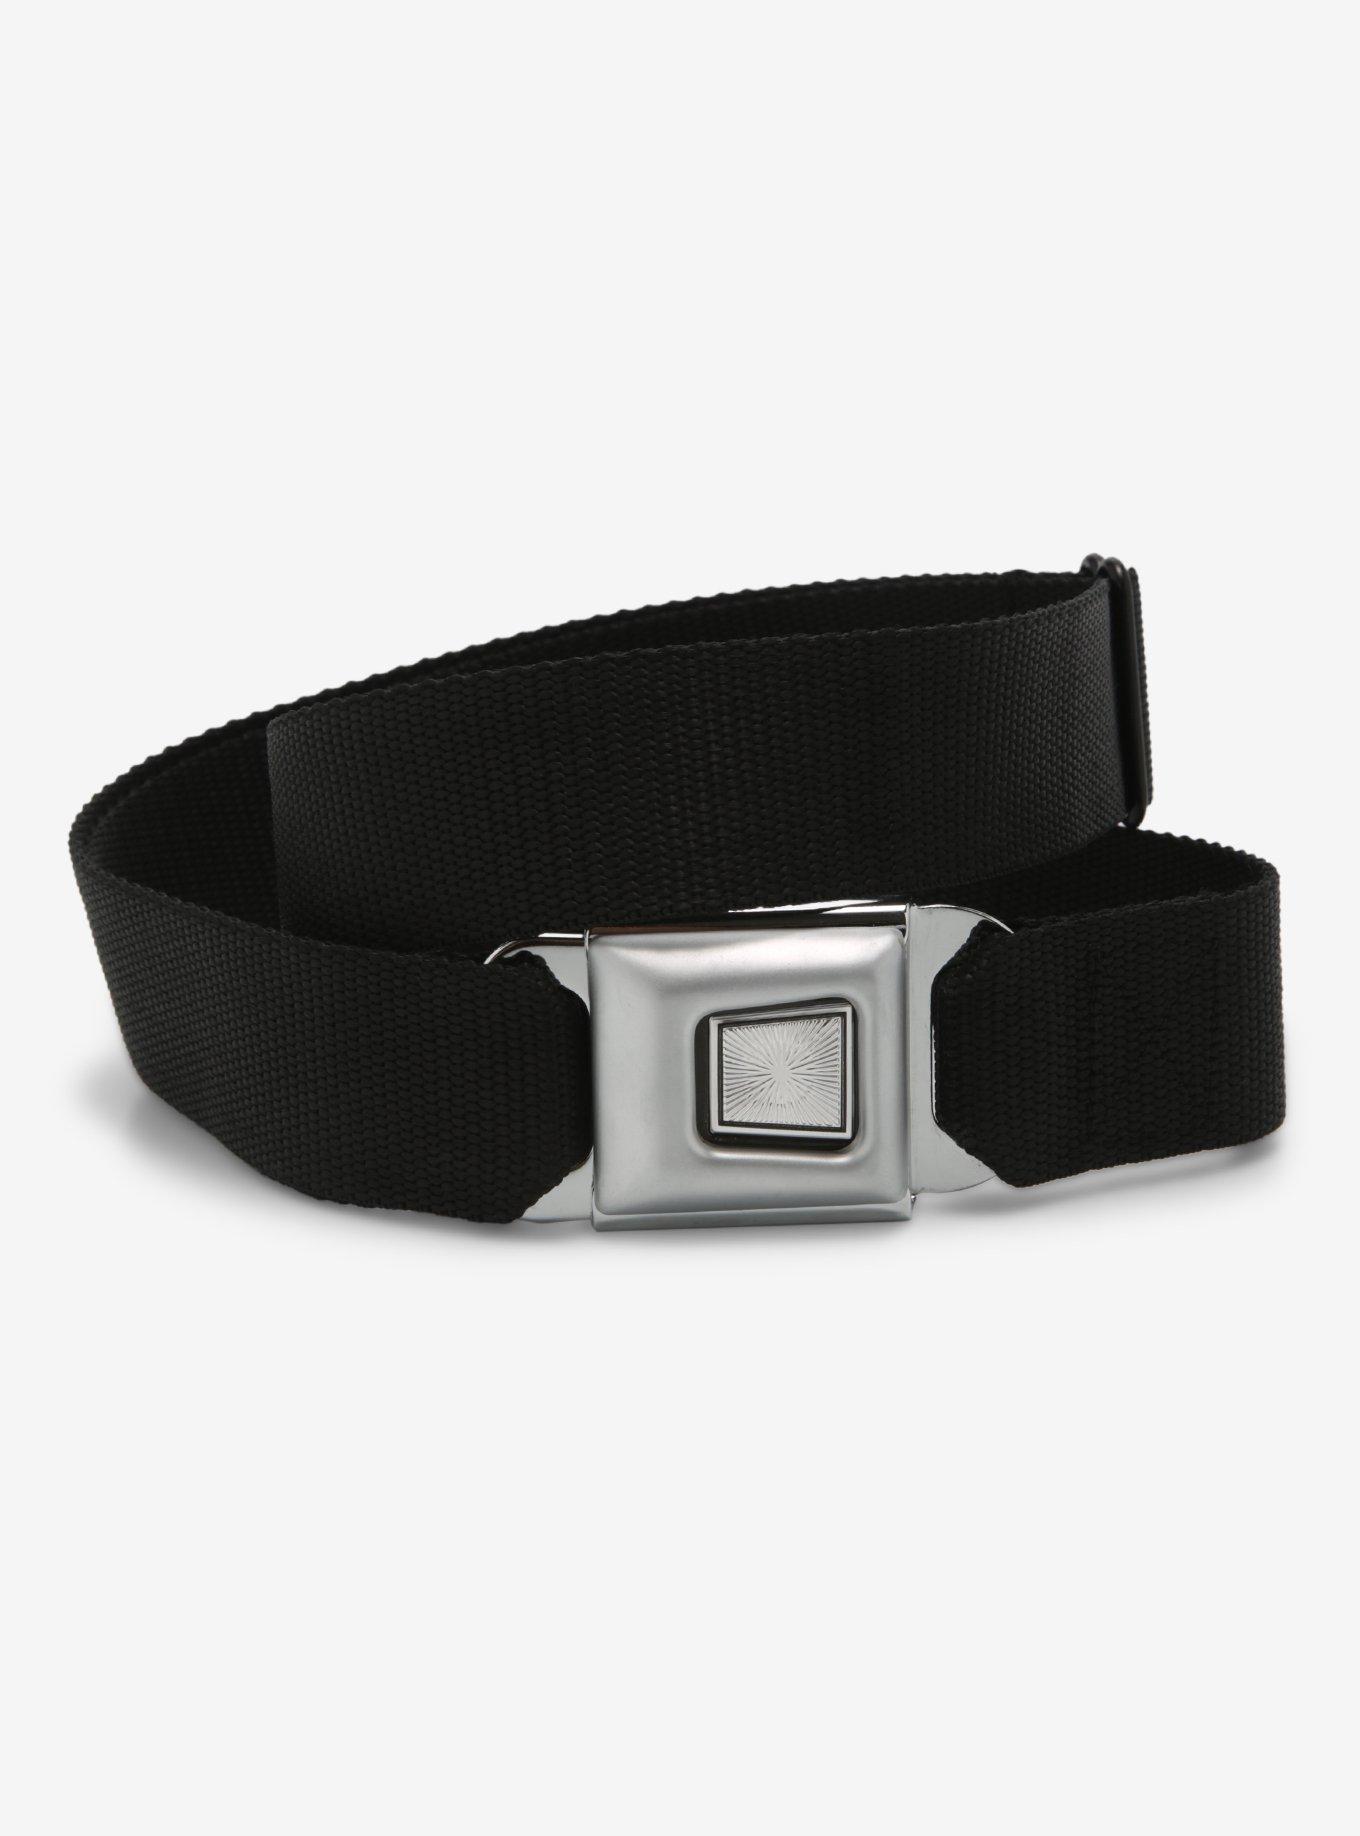 Starburst Seat Belt Buckle Black Belt For Men — Buckle-Down